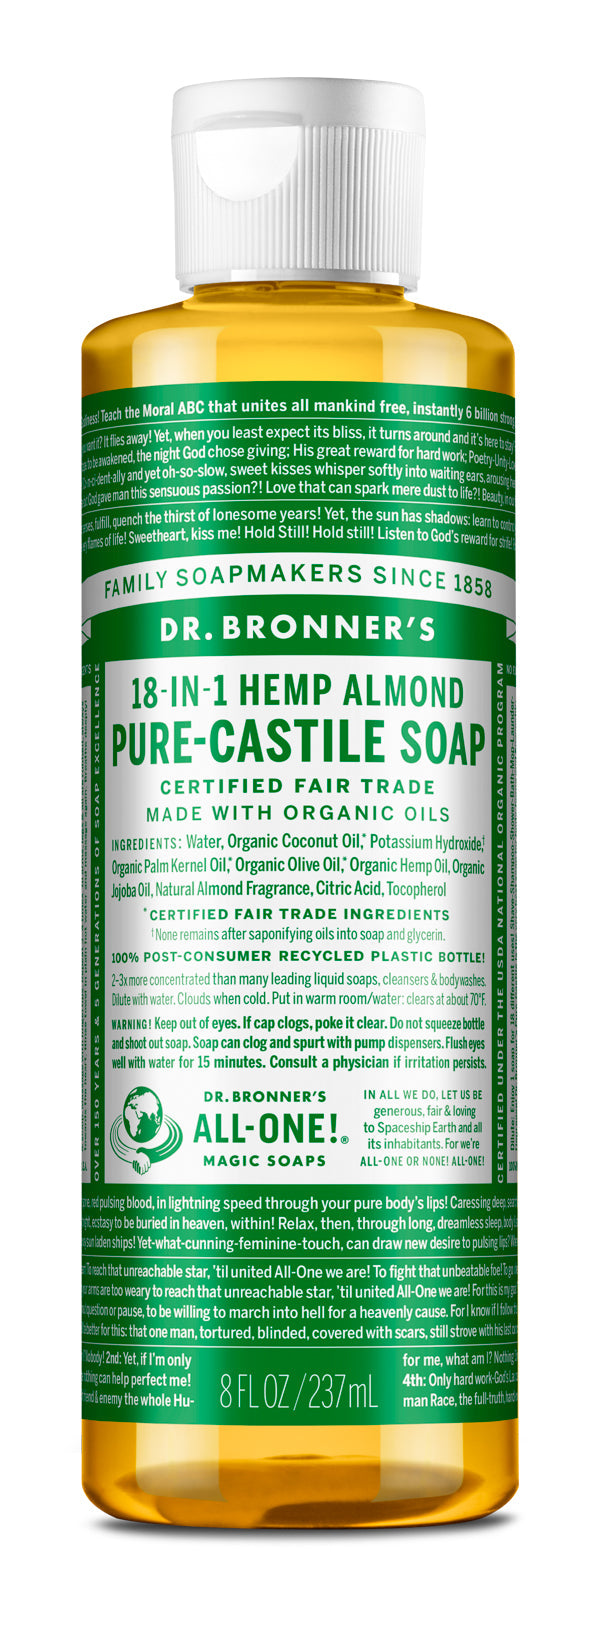 Almond - Pure-Castile Liquid Soap - 8 oz - by Dr Bronner's |ProCare Outlet|